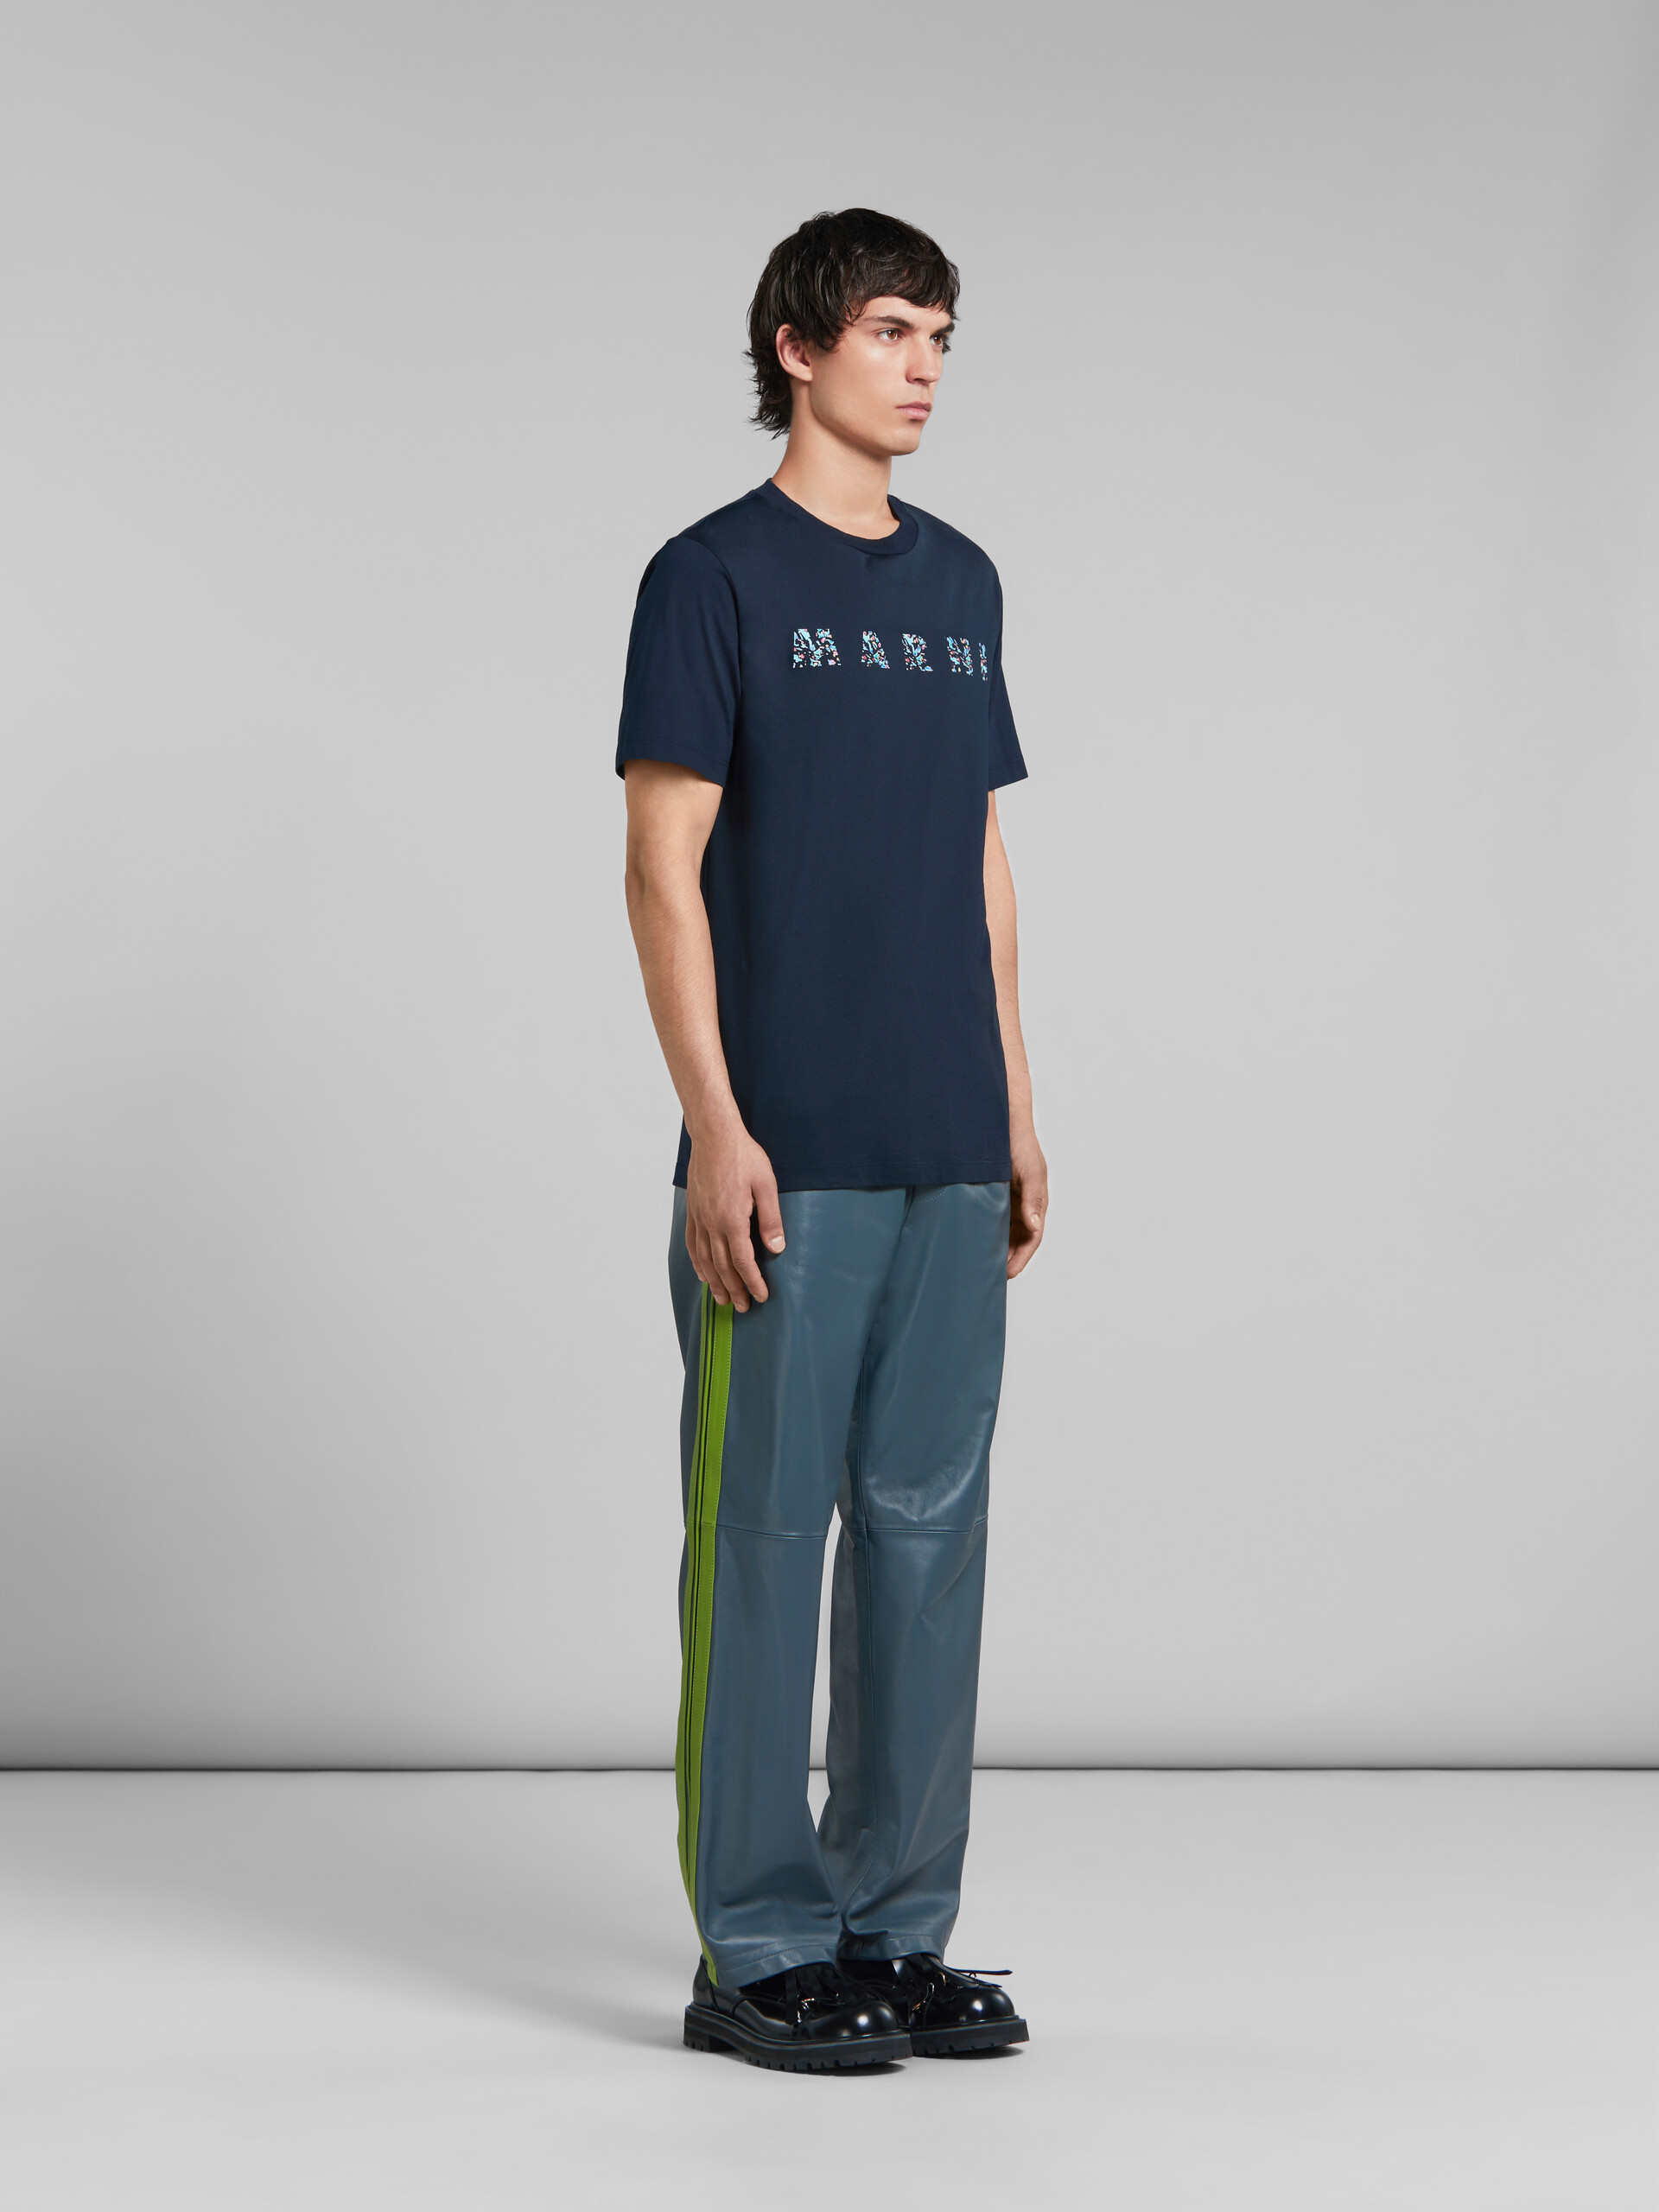 Dunkelblaues T-Shirt aus Bio-Baumwolle mit gemustertem Marni-Print - T-shirts - Image 5